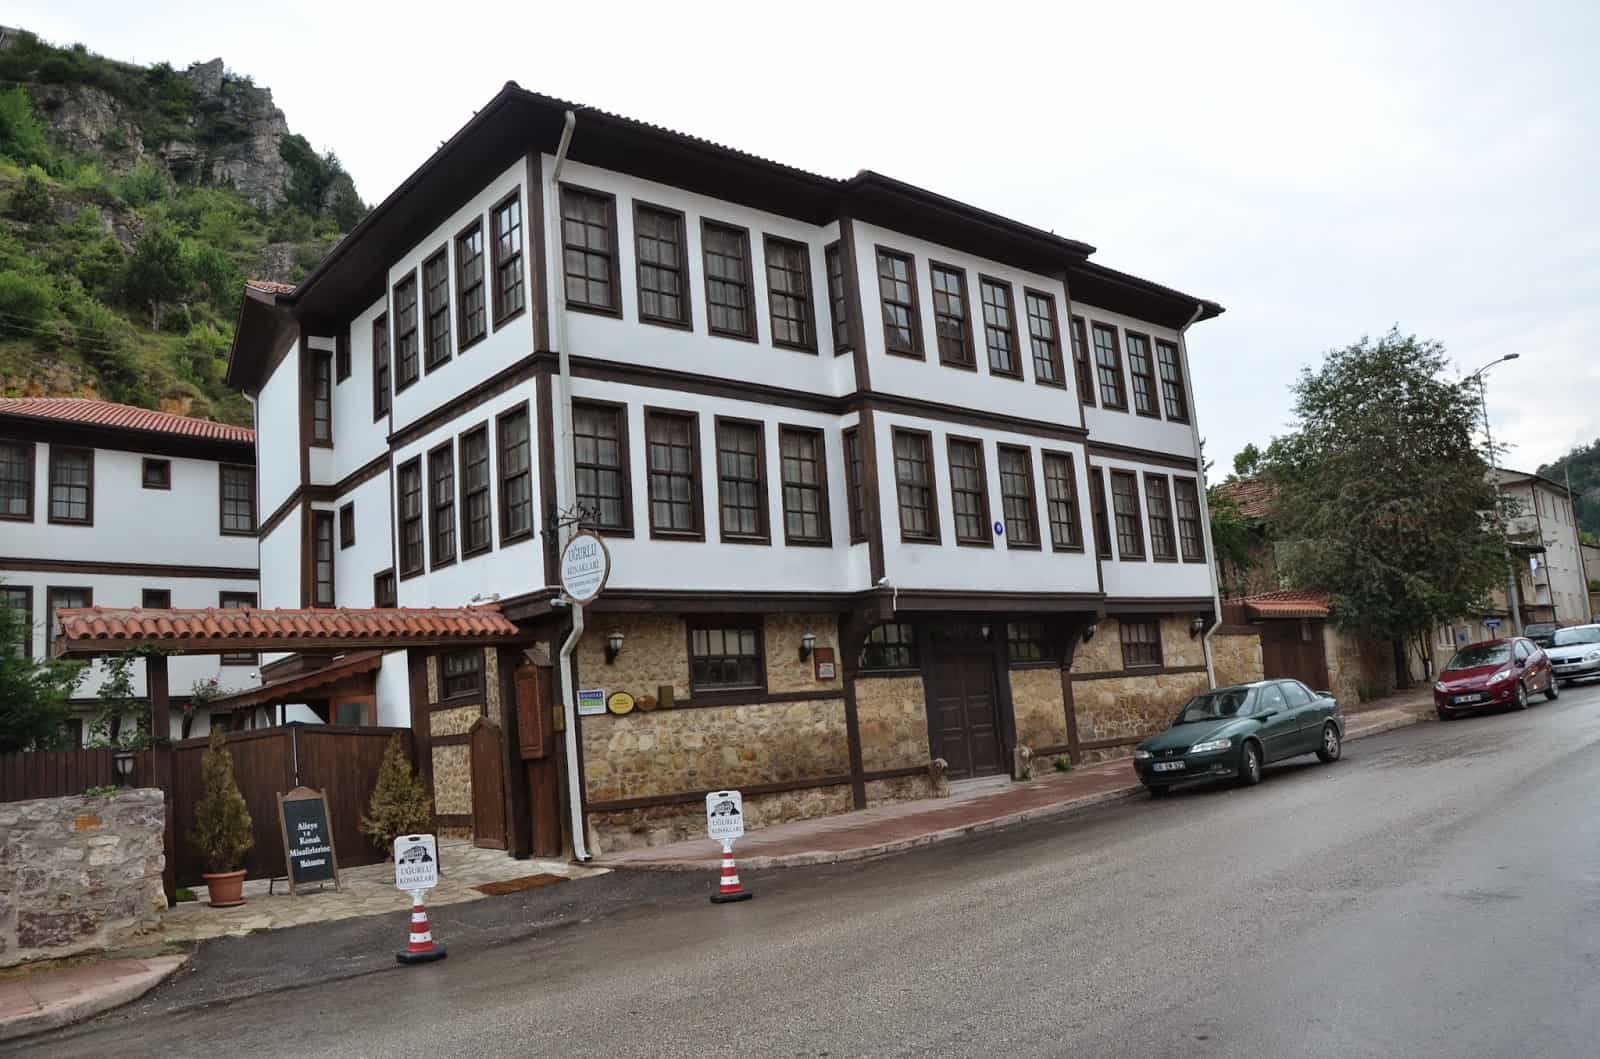 Uğurlu Mansions in Kastamonu, Turkey